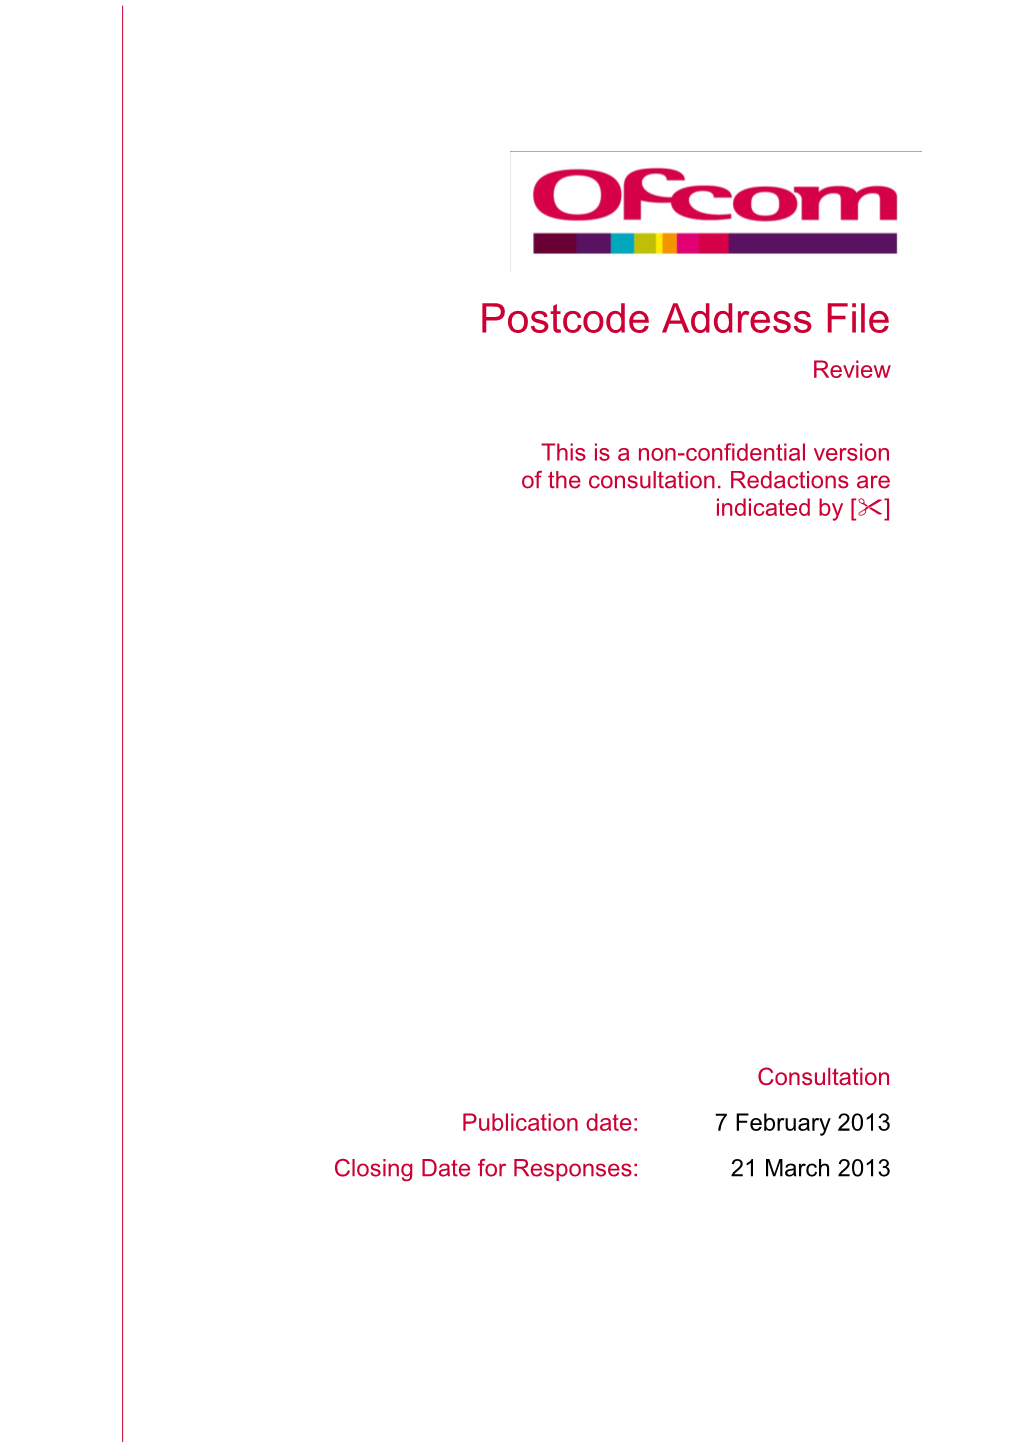 Postcode Address File Review